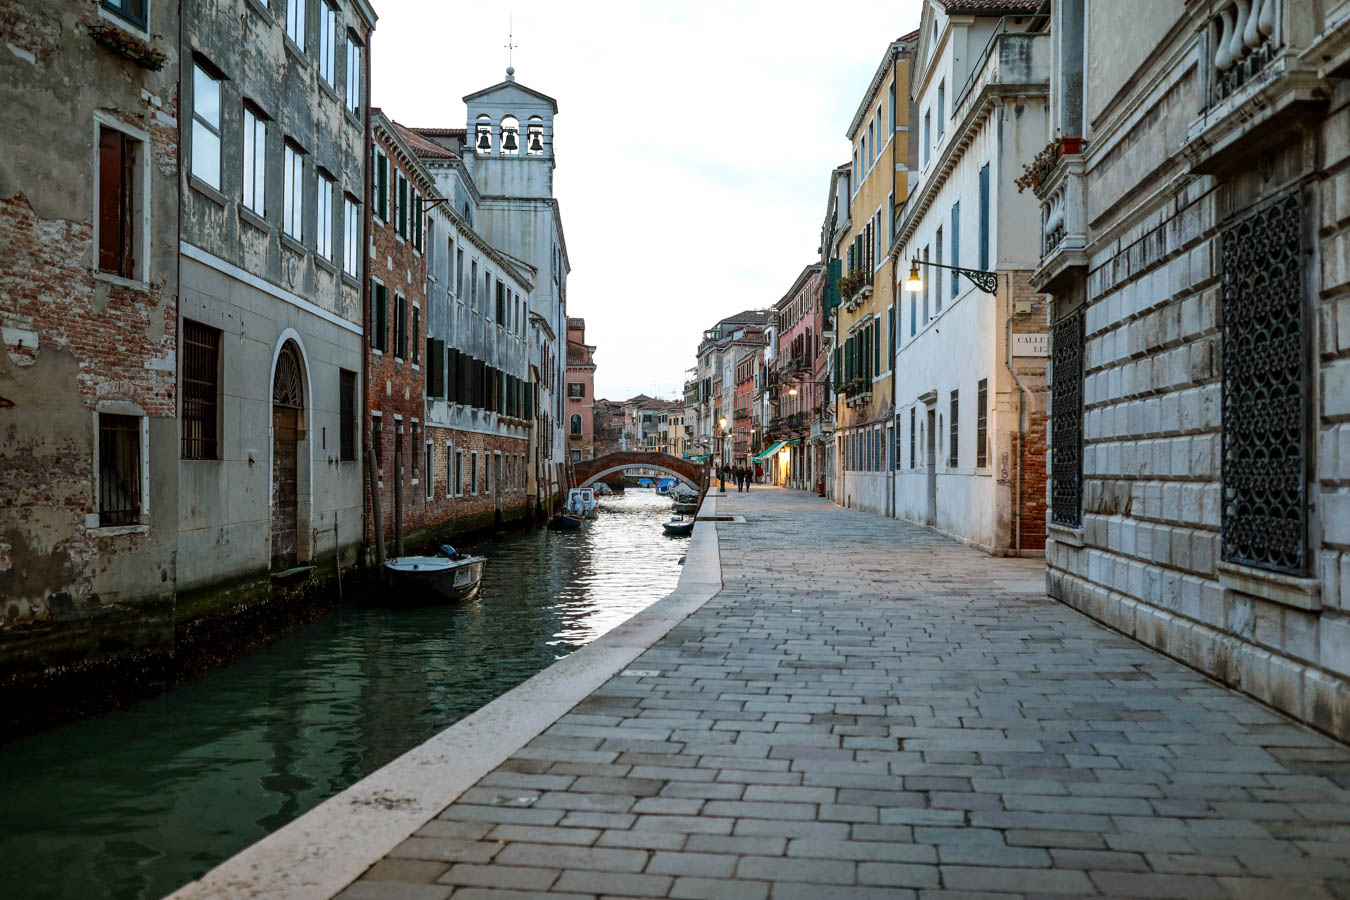 Deserted Venice contemplates a future without tourist hordes after ...